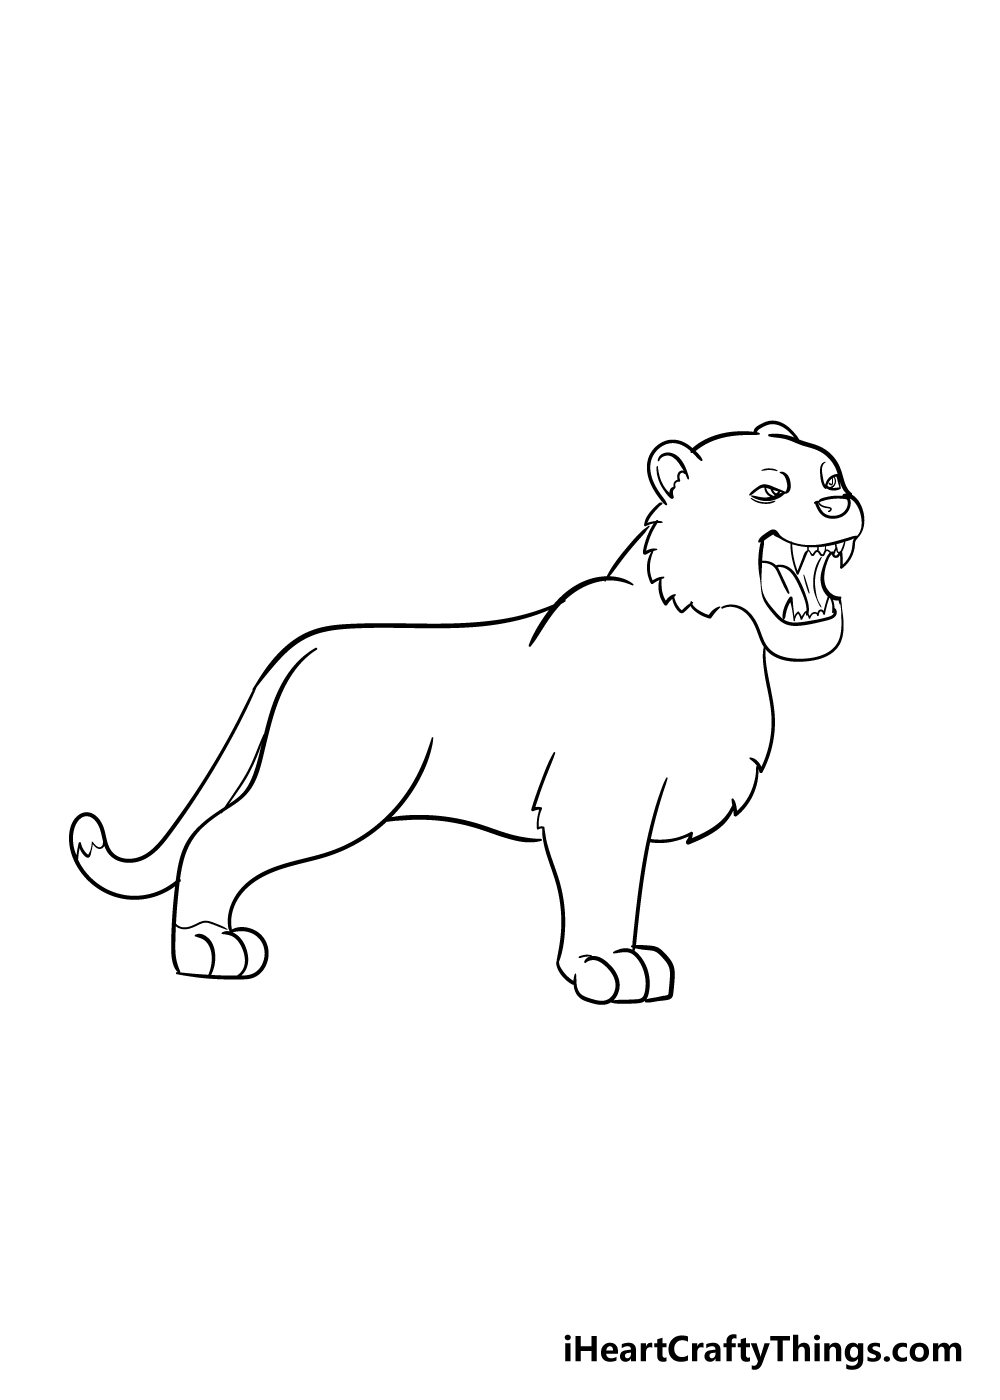 drawing tiger step 5